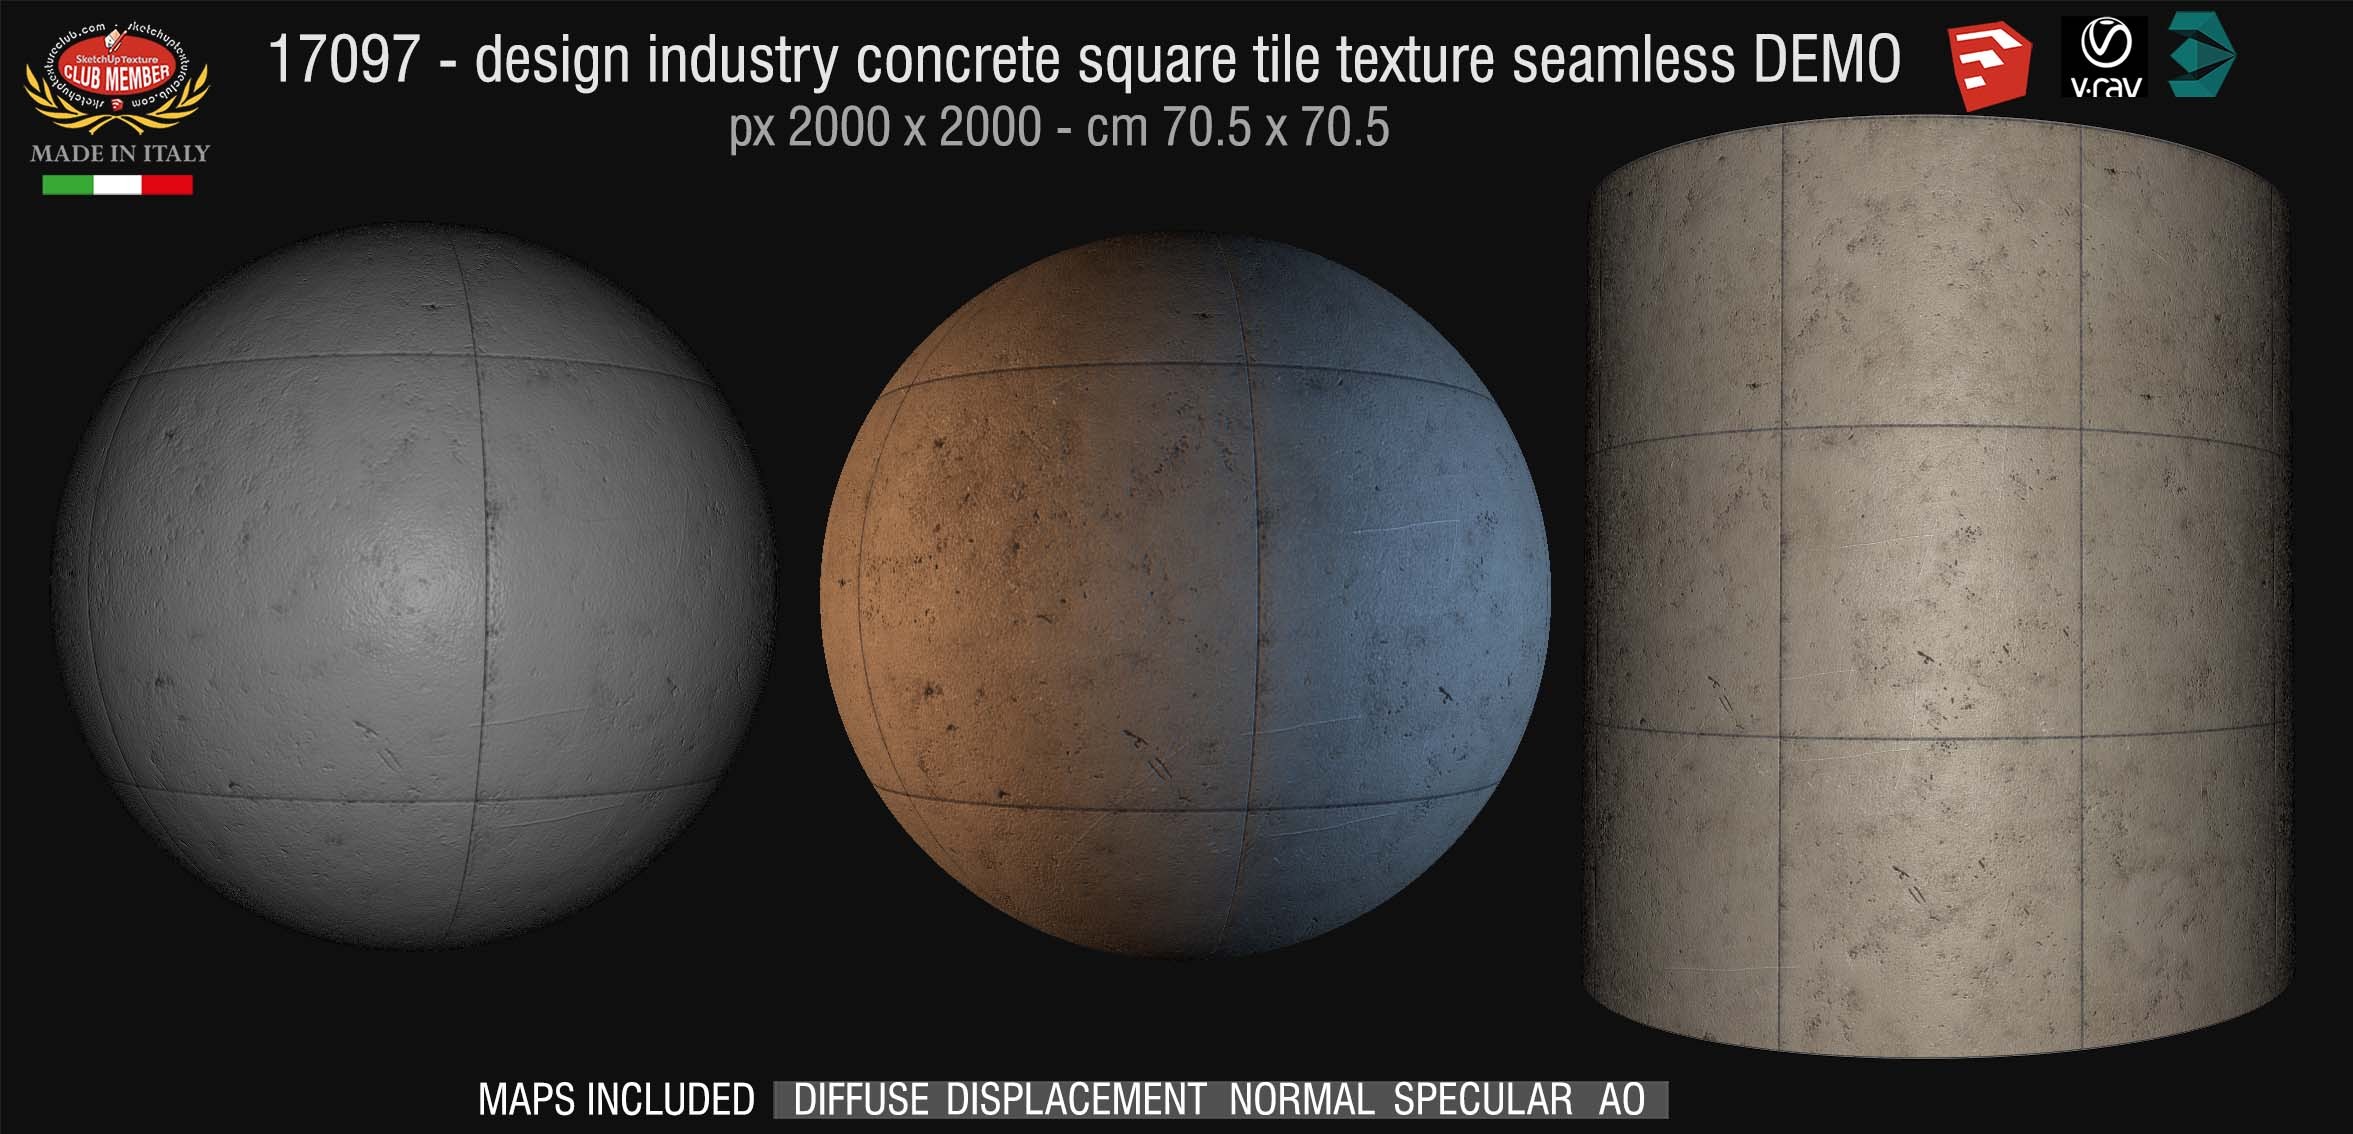 17097 HR Design industry concrete square tile texture seamless + maps DEMO